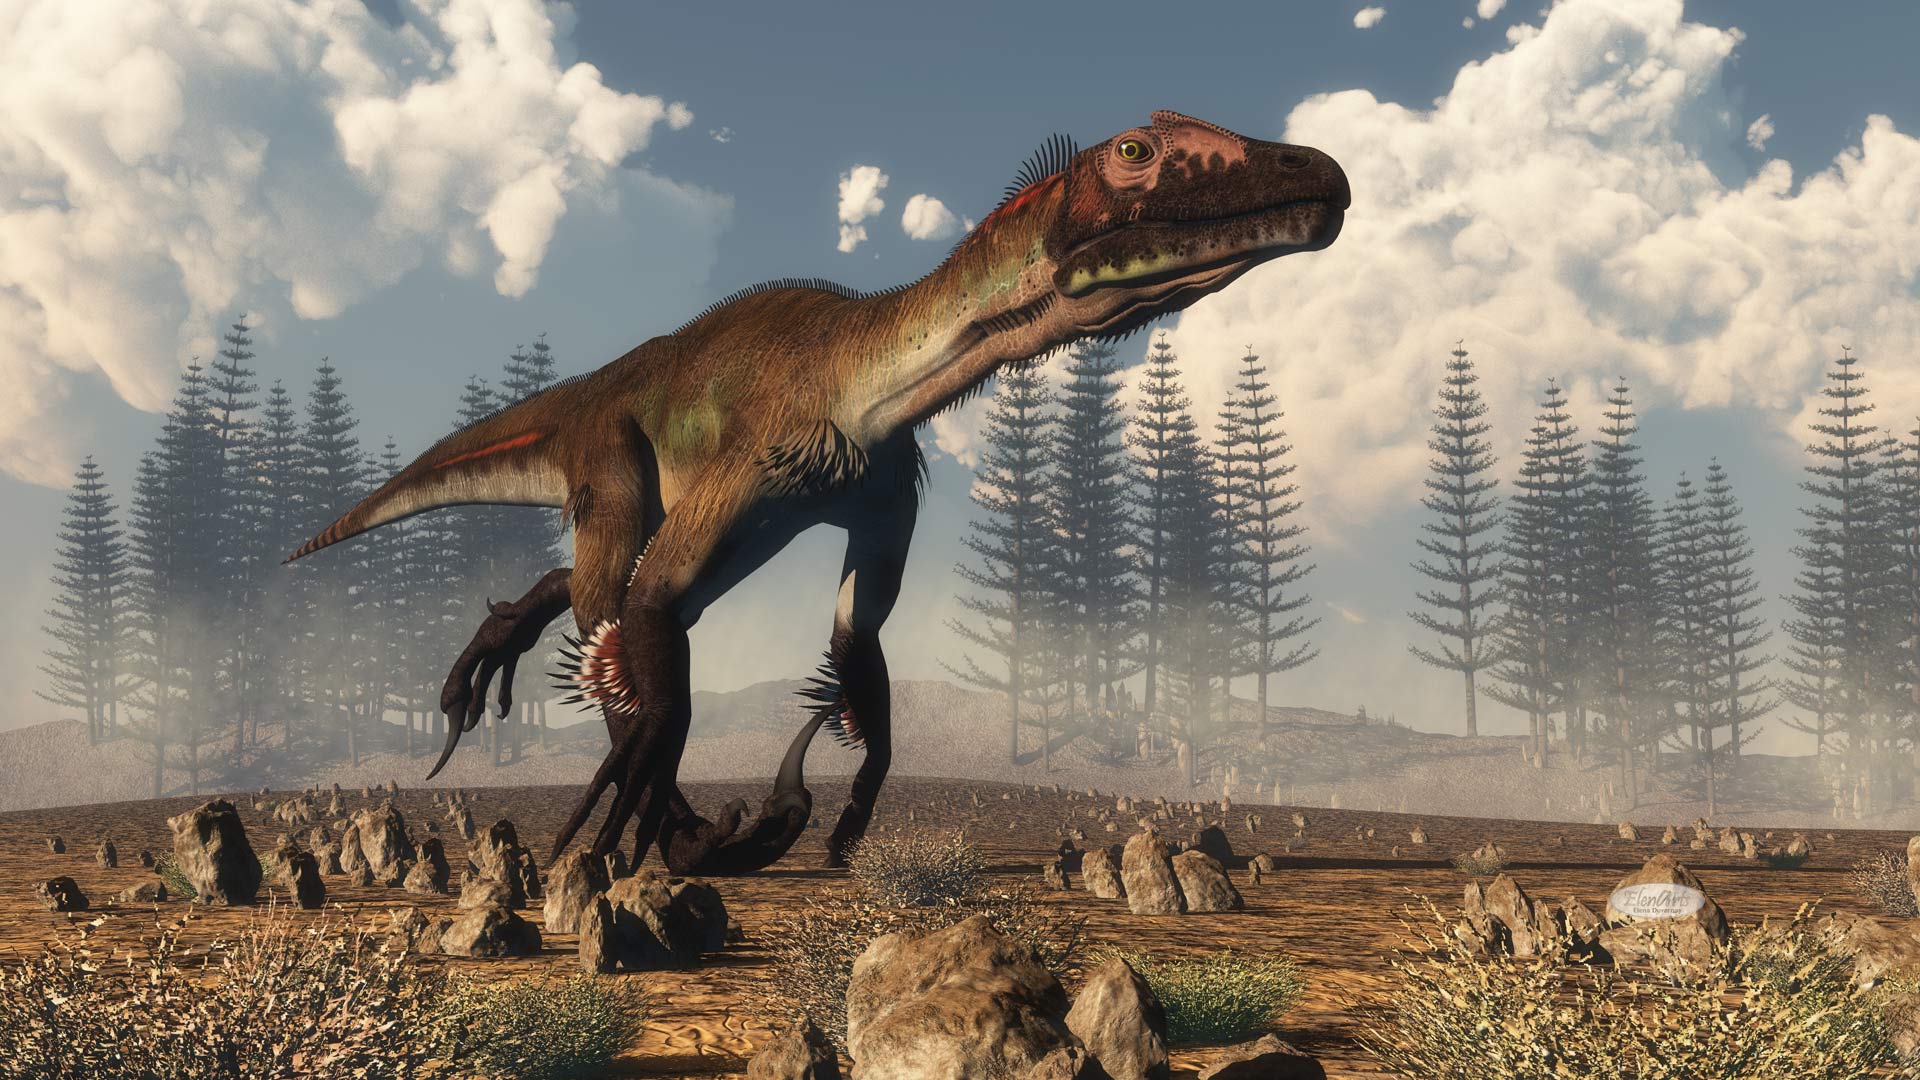 Utahraptor dinosaur running in the desert, calamite forest in the background - 3D render